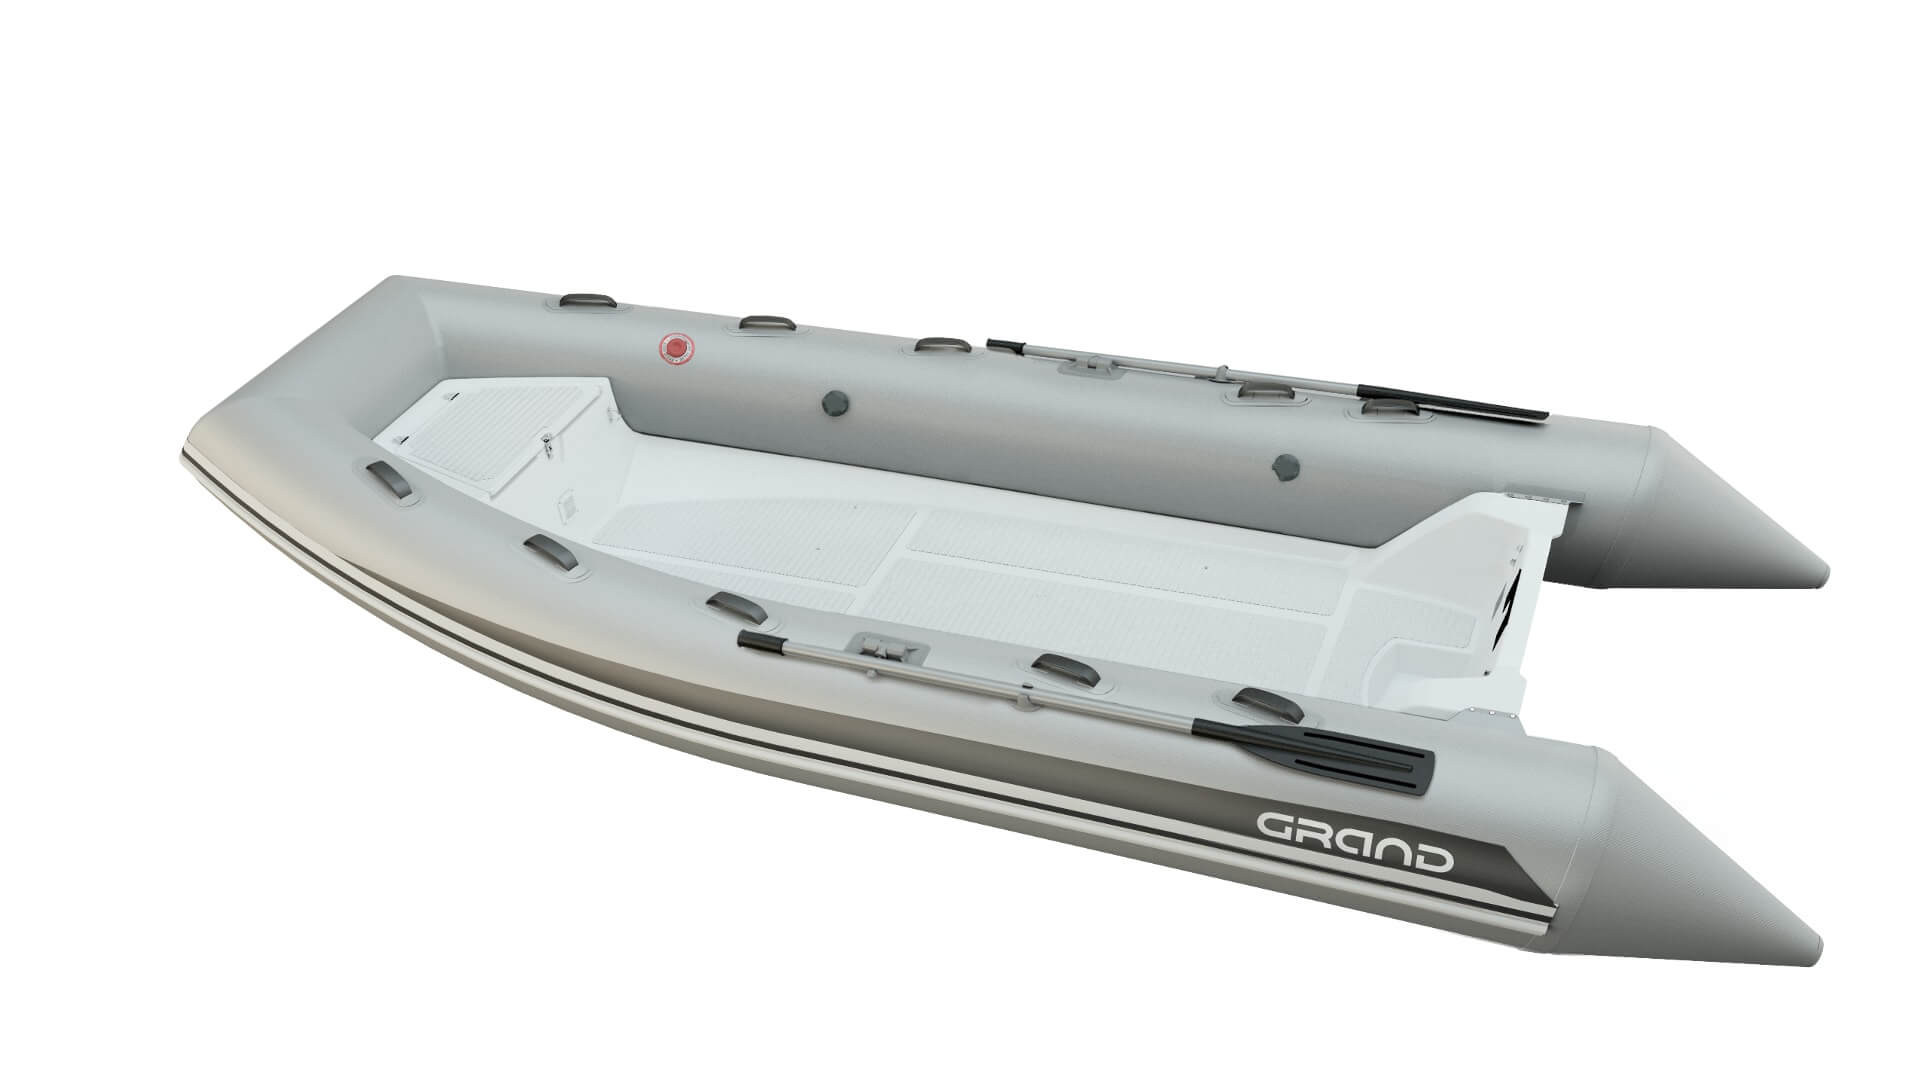 Надувная лодка с жестким дном GRAND Silver Line S470N, Надувная лодка GRAND Silver Line S470N, GRAND Silver Line S470NF, GRAND Silver Line S470N, GRAND S470NF, GRAND S470N, GRAND S470, Надувная лодка GRAND, Надувная лодка ГРАНД, Надувная лодка с жестким дном, RIB, Rigid Inflatable Boats